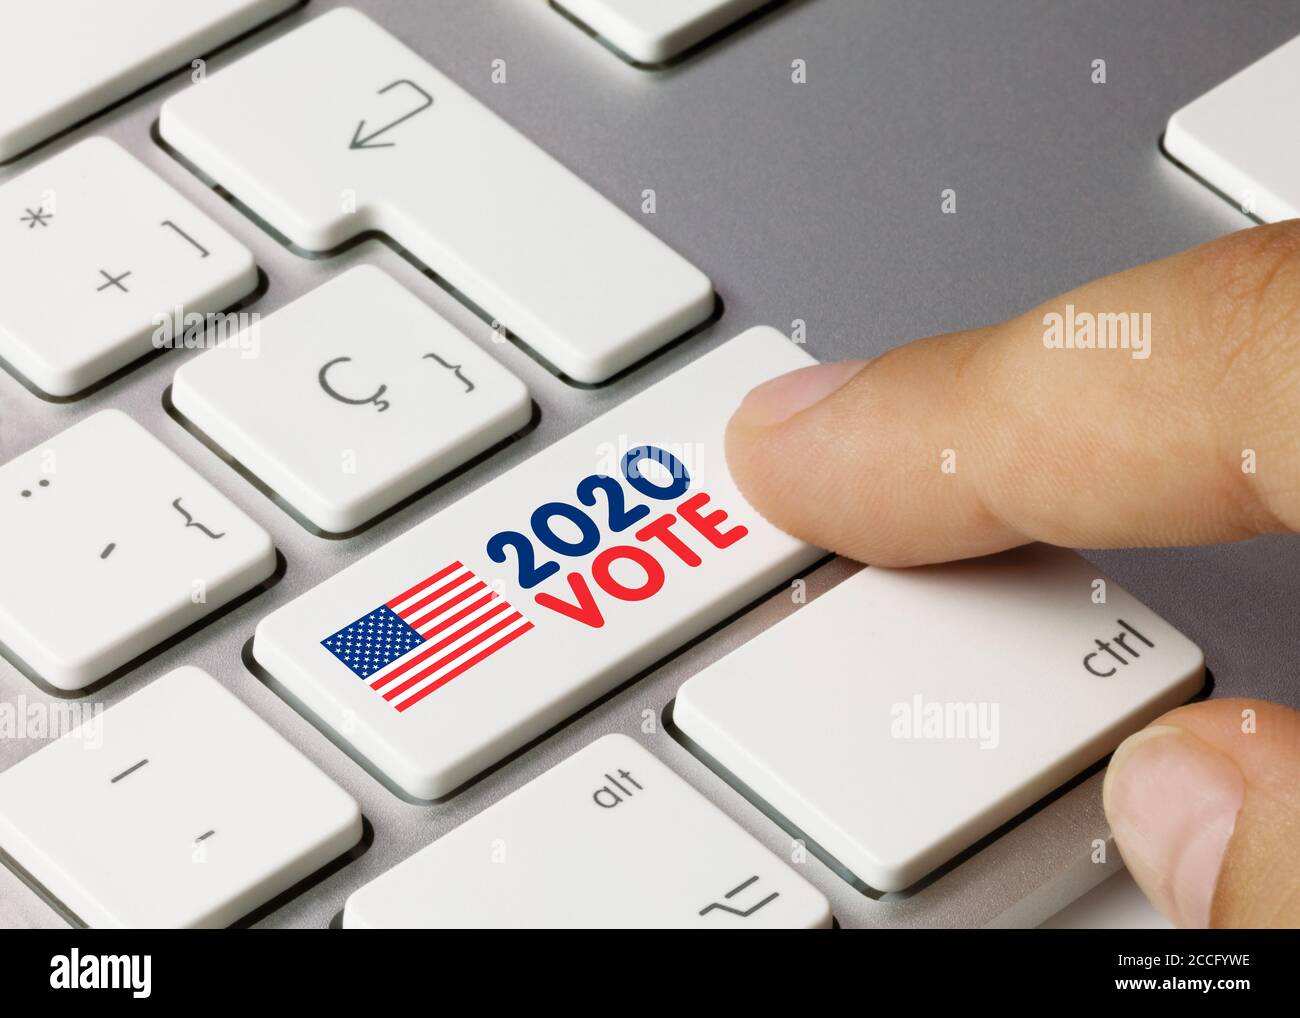 EEUU 2020 VOTE Written on White Key of Metallic Keyboard. Finger pressing key. Stock Photo